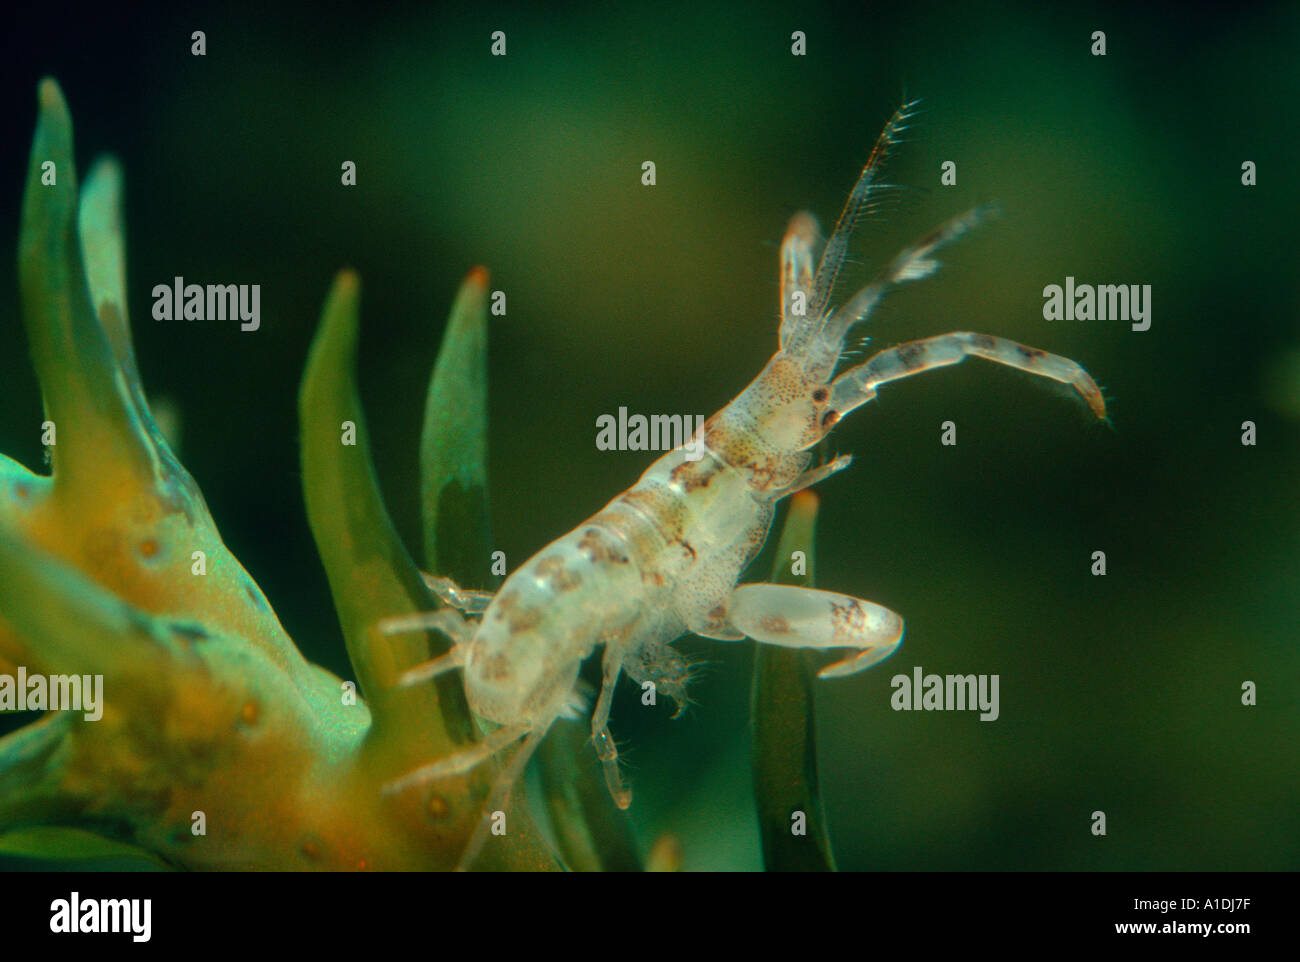 Amphipod, Gammarus sp. On alga. Underwater Stock Photo